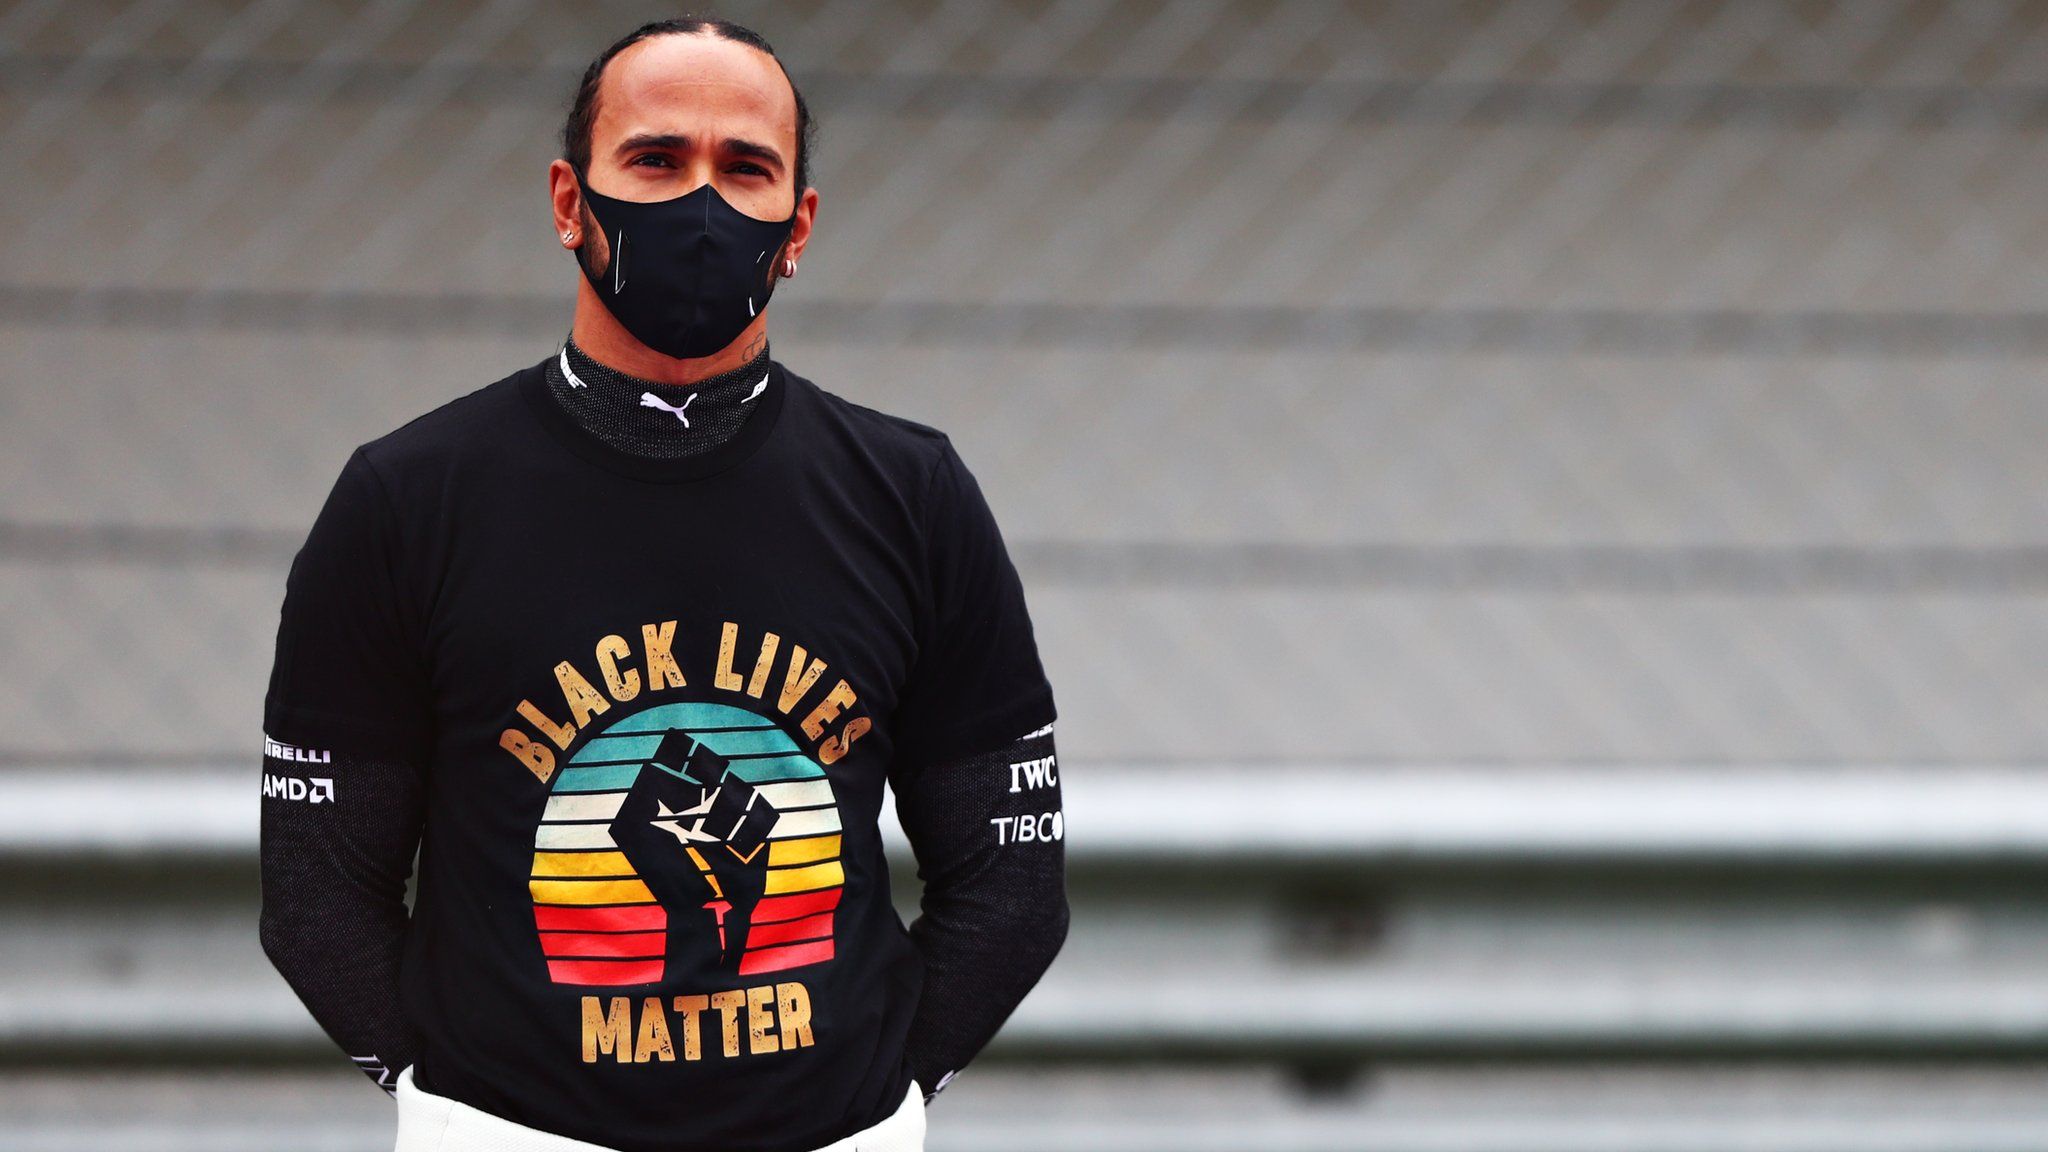 Lewis Hamilton wears a Black Lives Matter shirt